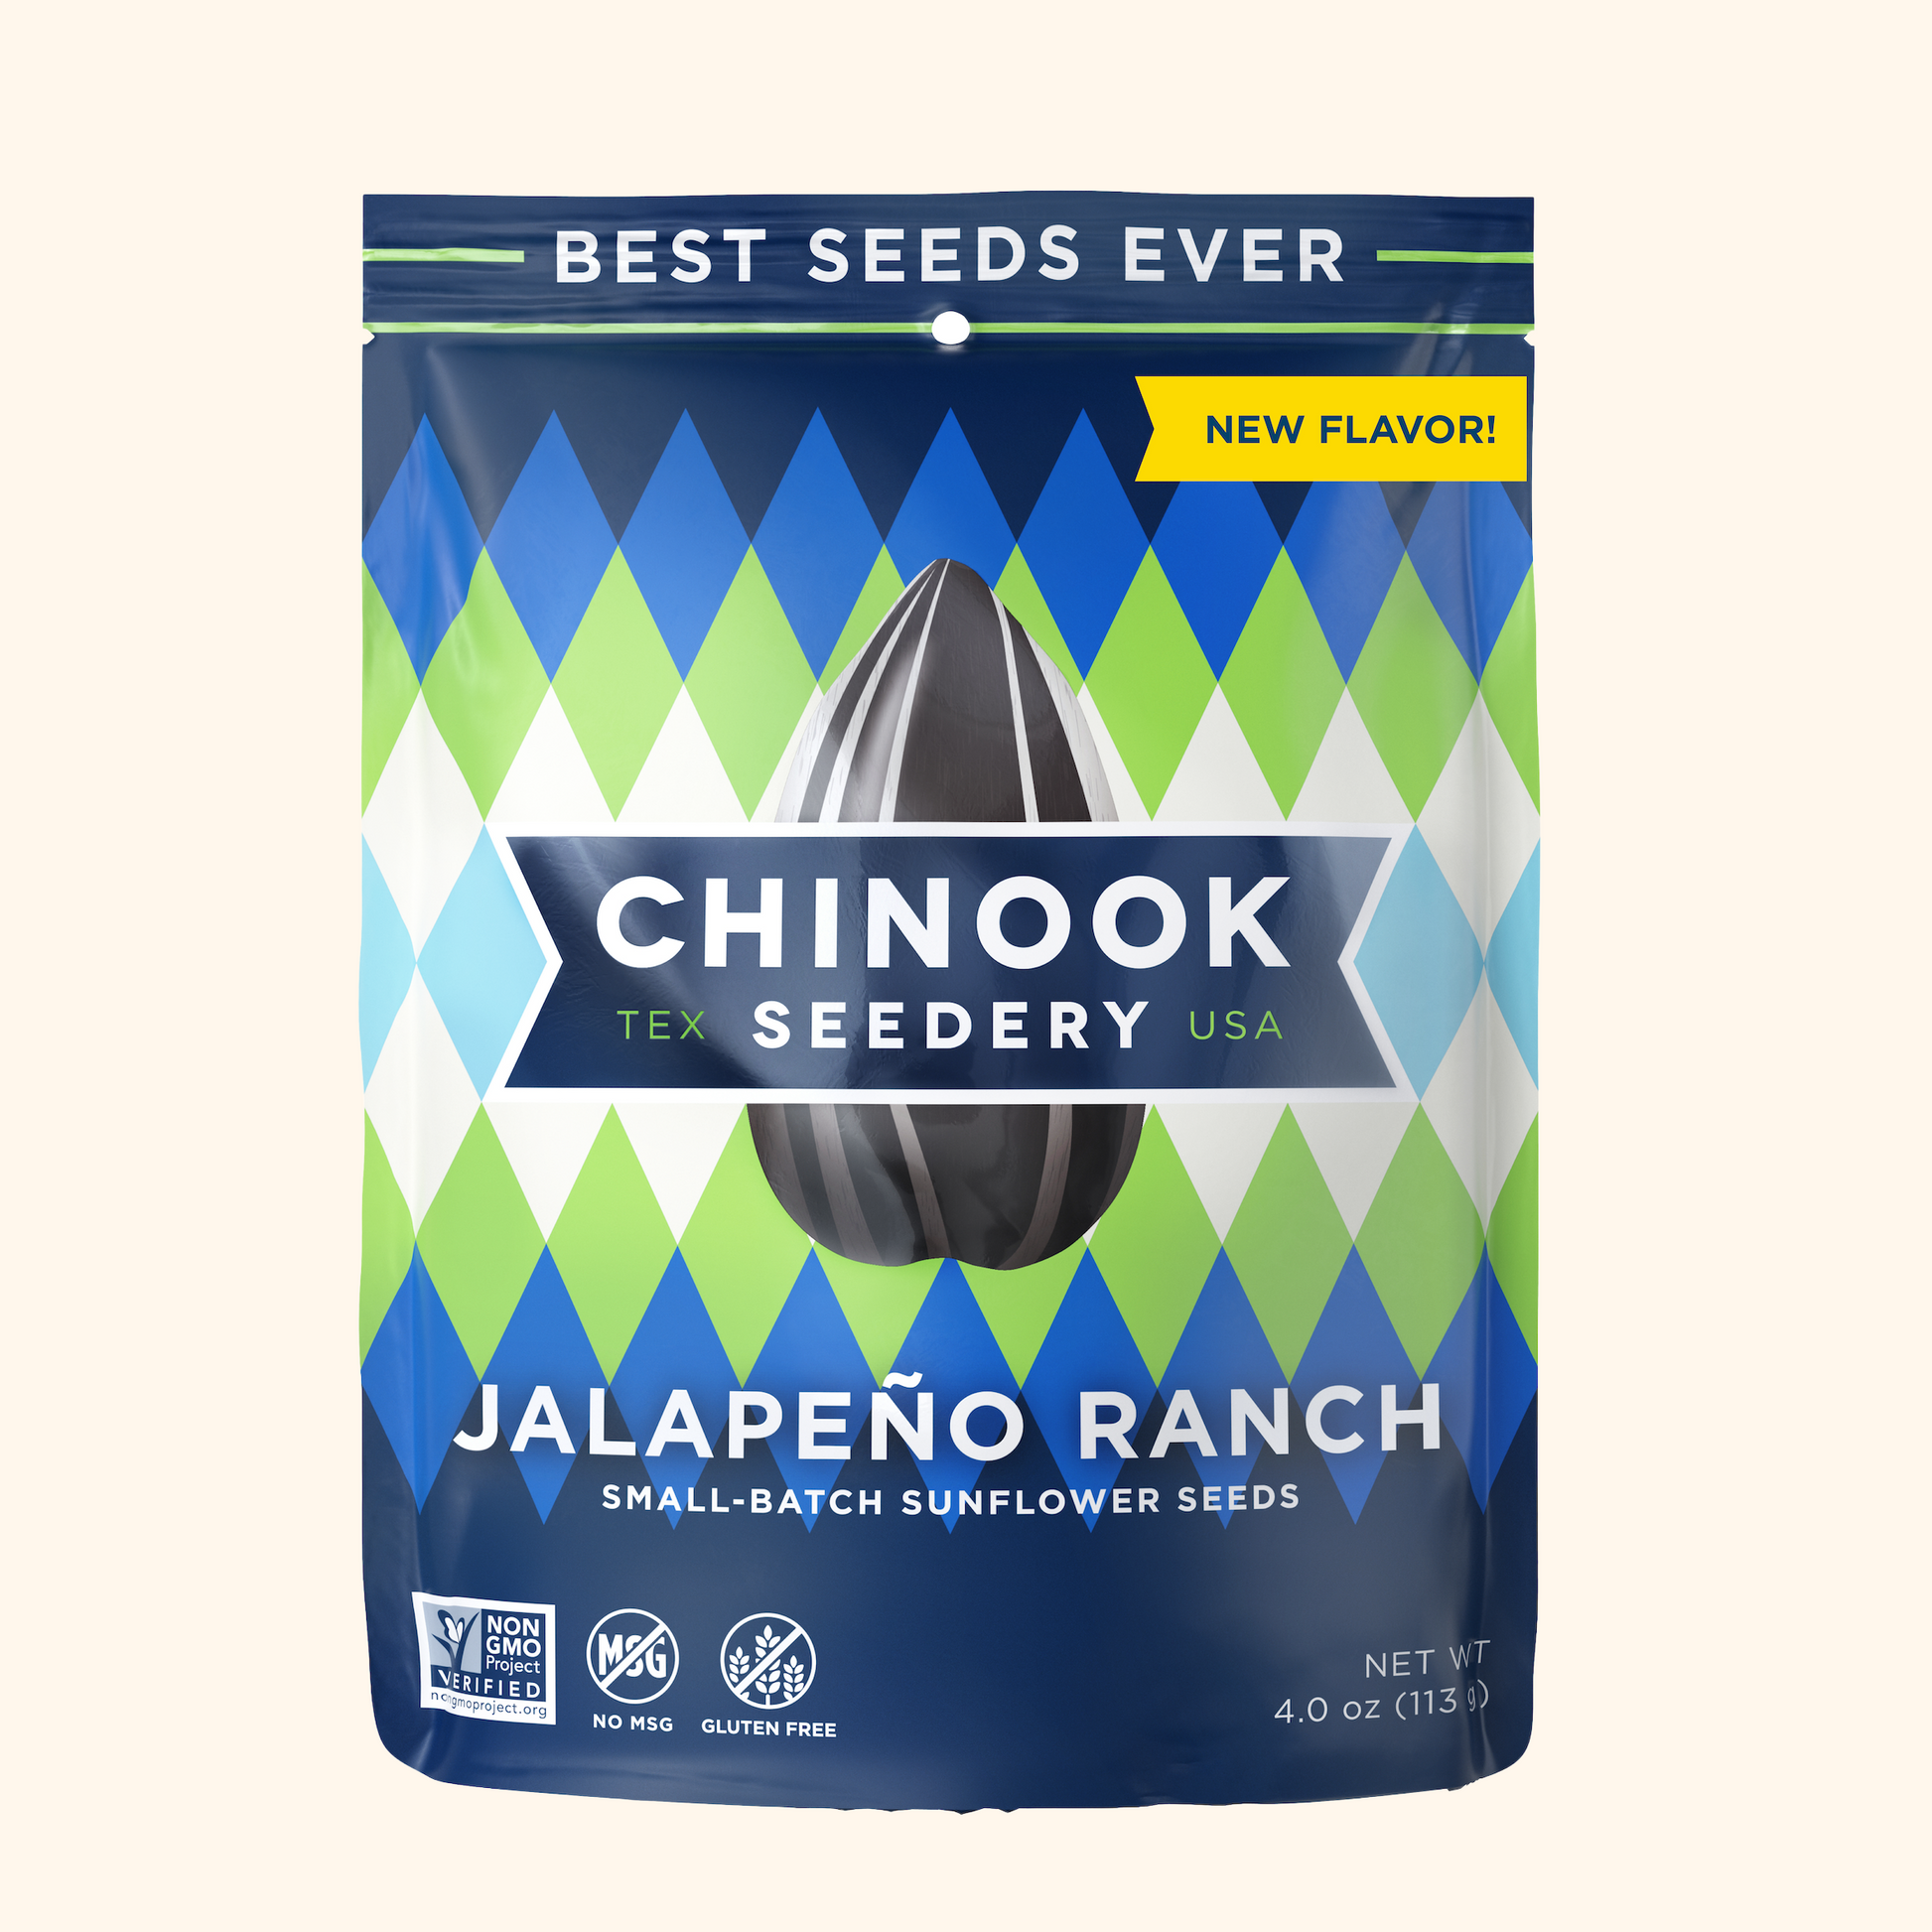 Jalapeño Ranch sunflower seeds bigs flavor